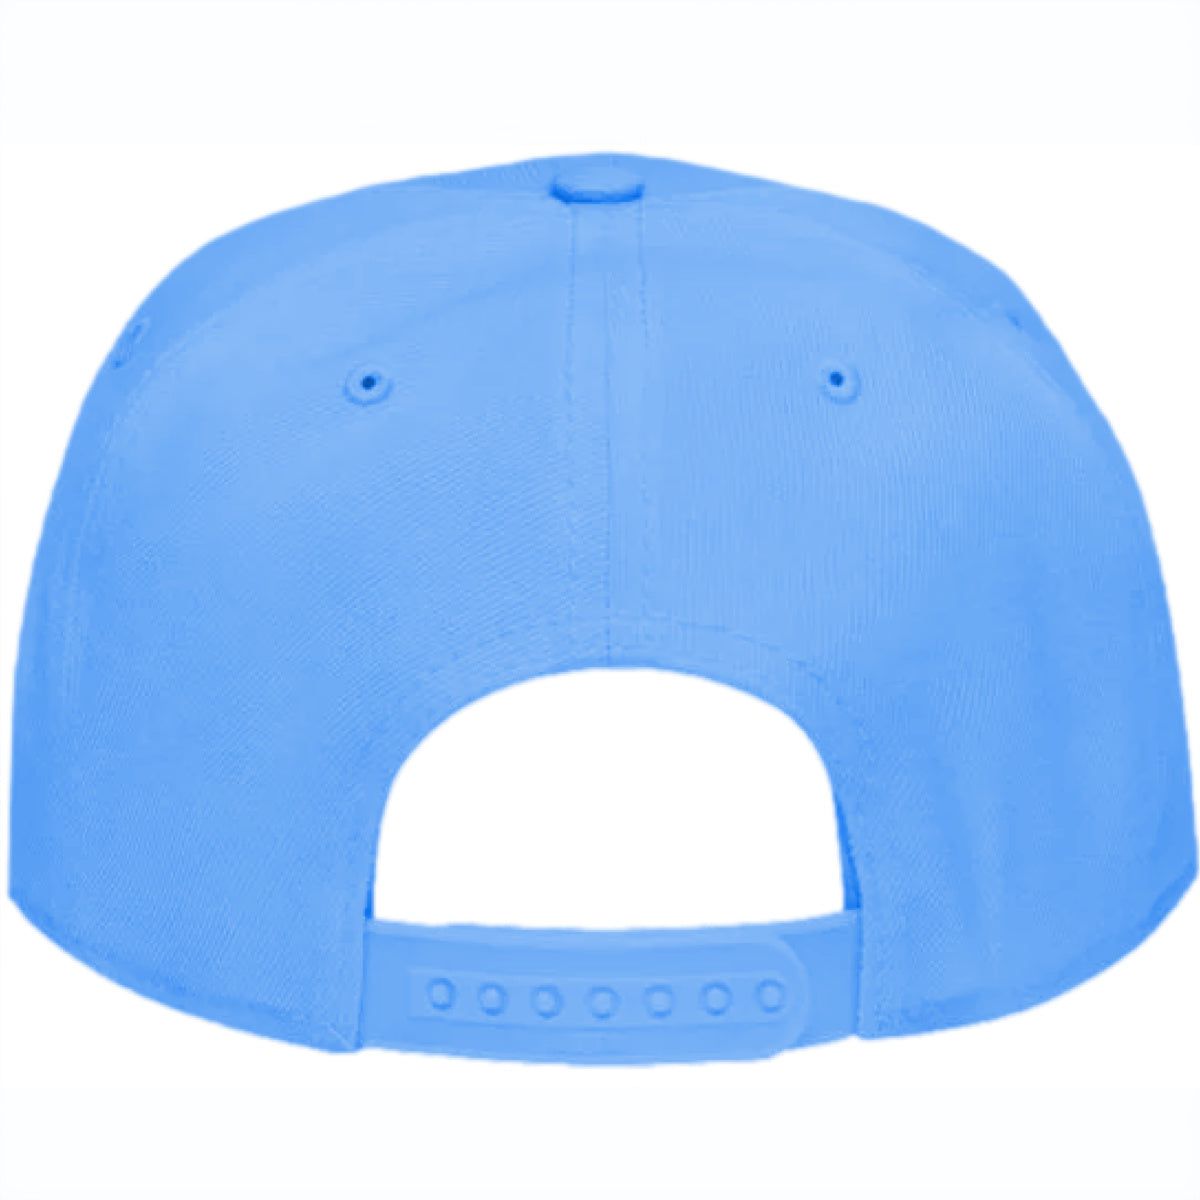 UNC 5s Snapback Hat - Jordan 5 University Blue 5s Hats - F#ck